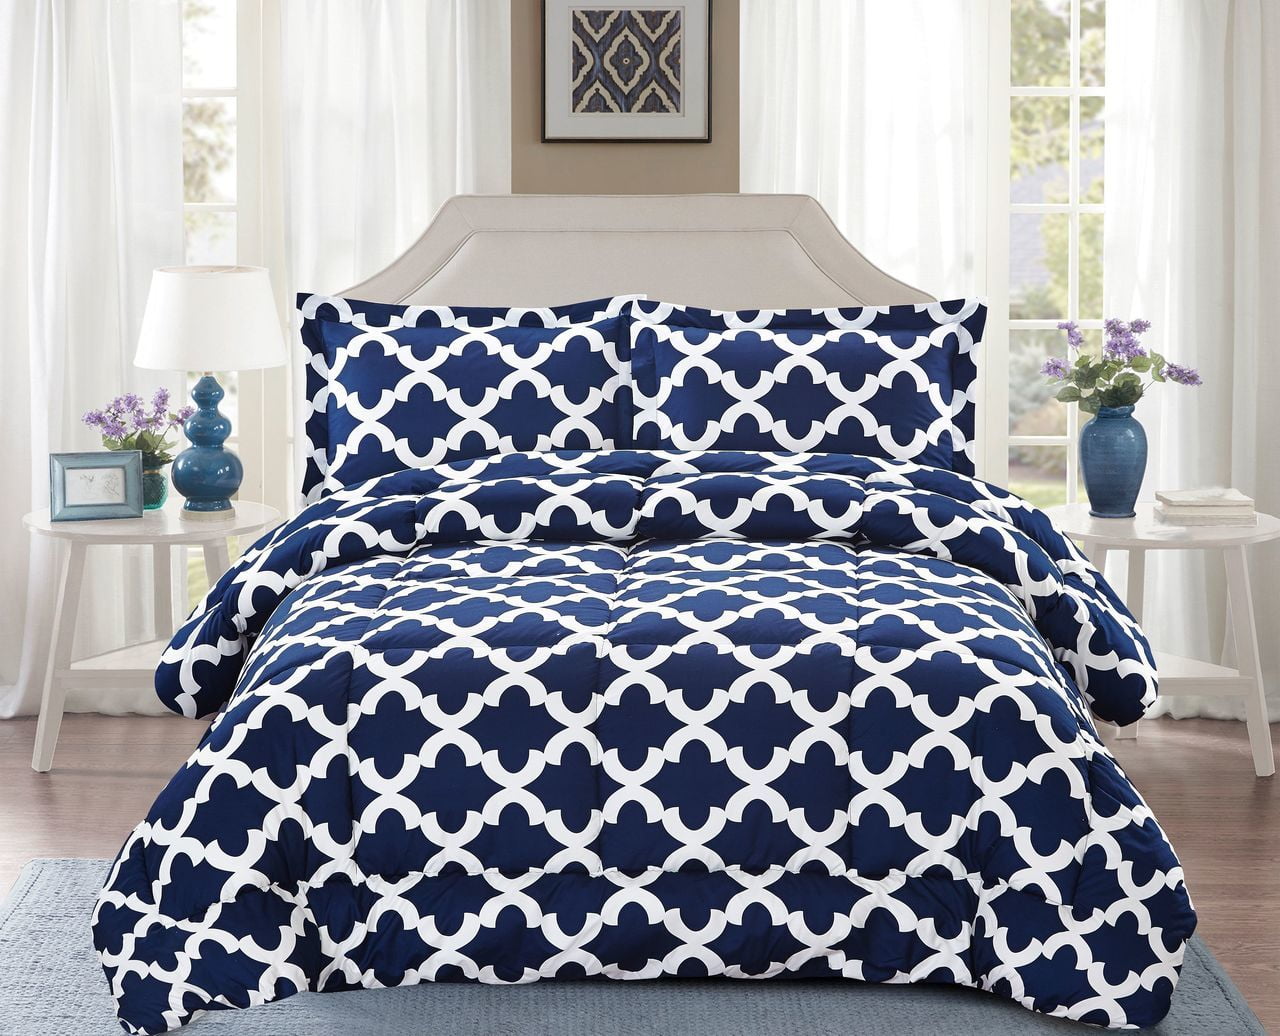 Floral Black Premium Down Alternative Soft Comforter Set K-Q Bed Pillow Shams US 